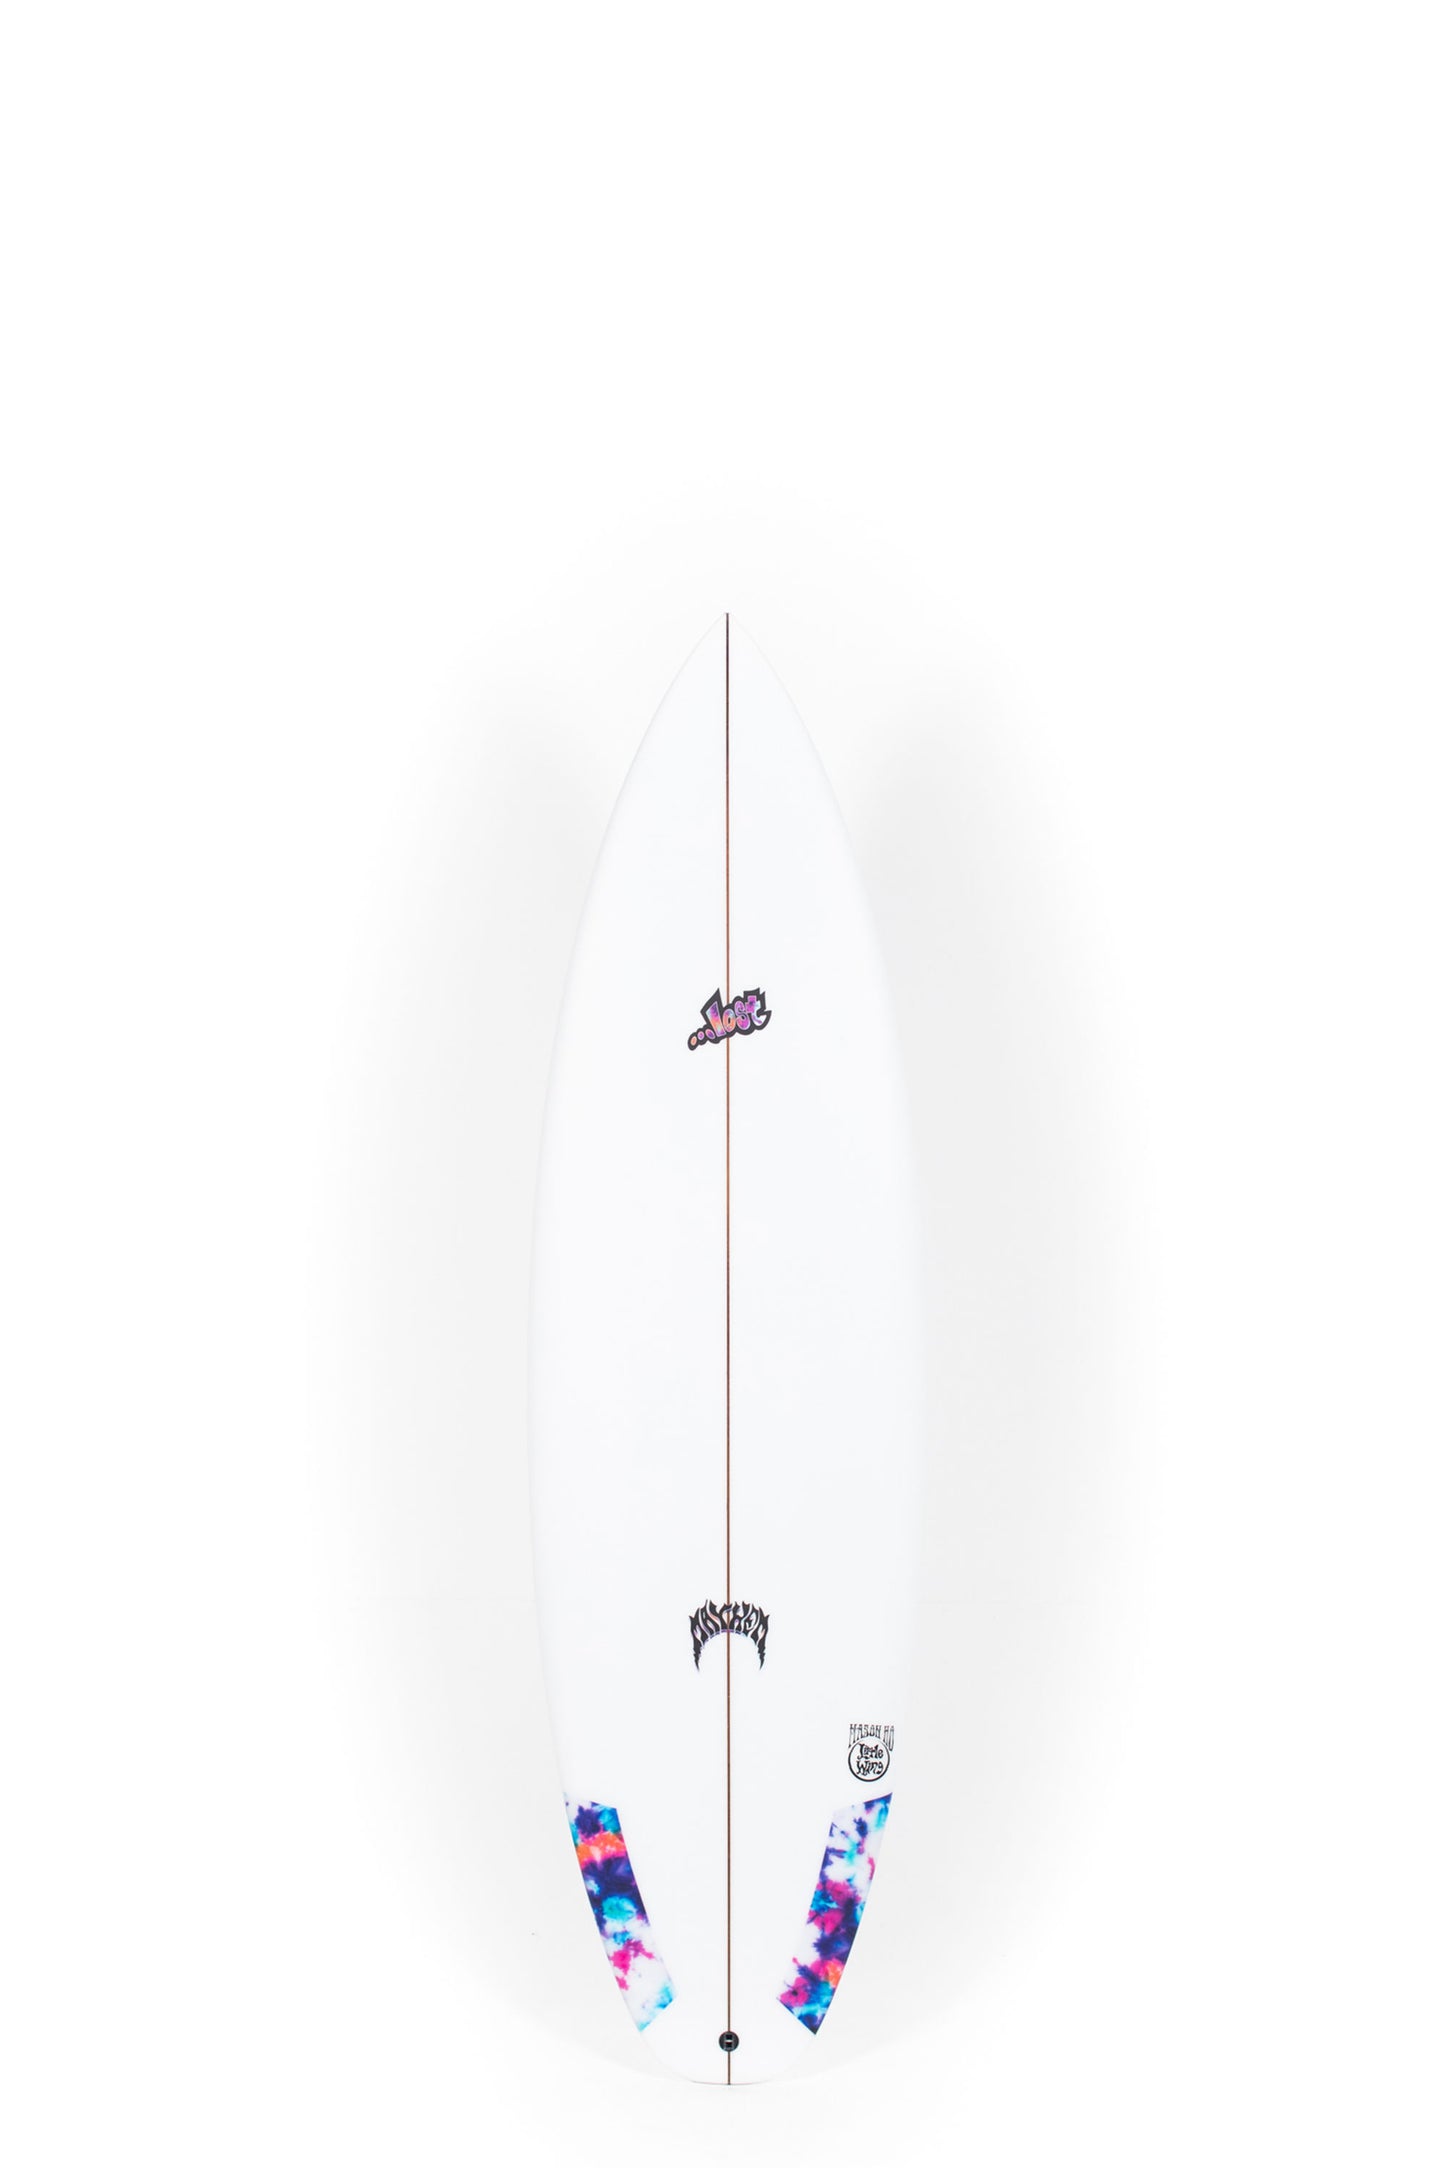 Pukas Surf Shop - Lost Surfboards - LITTLE WING by Matt Biolos - 6’4” x 21 x 2,7 - 37'5L - MH15623